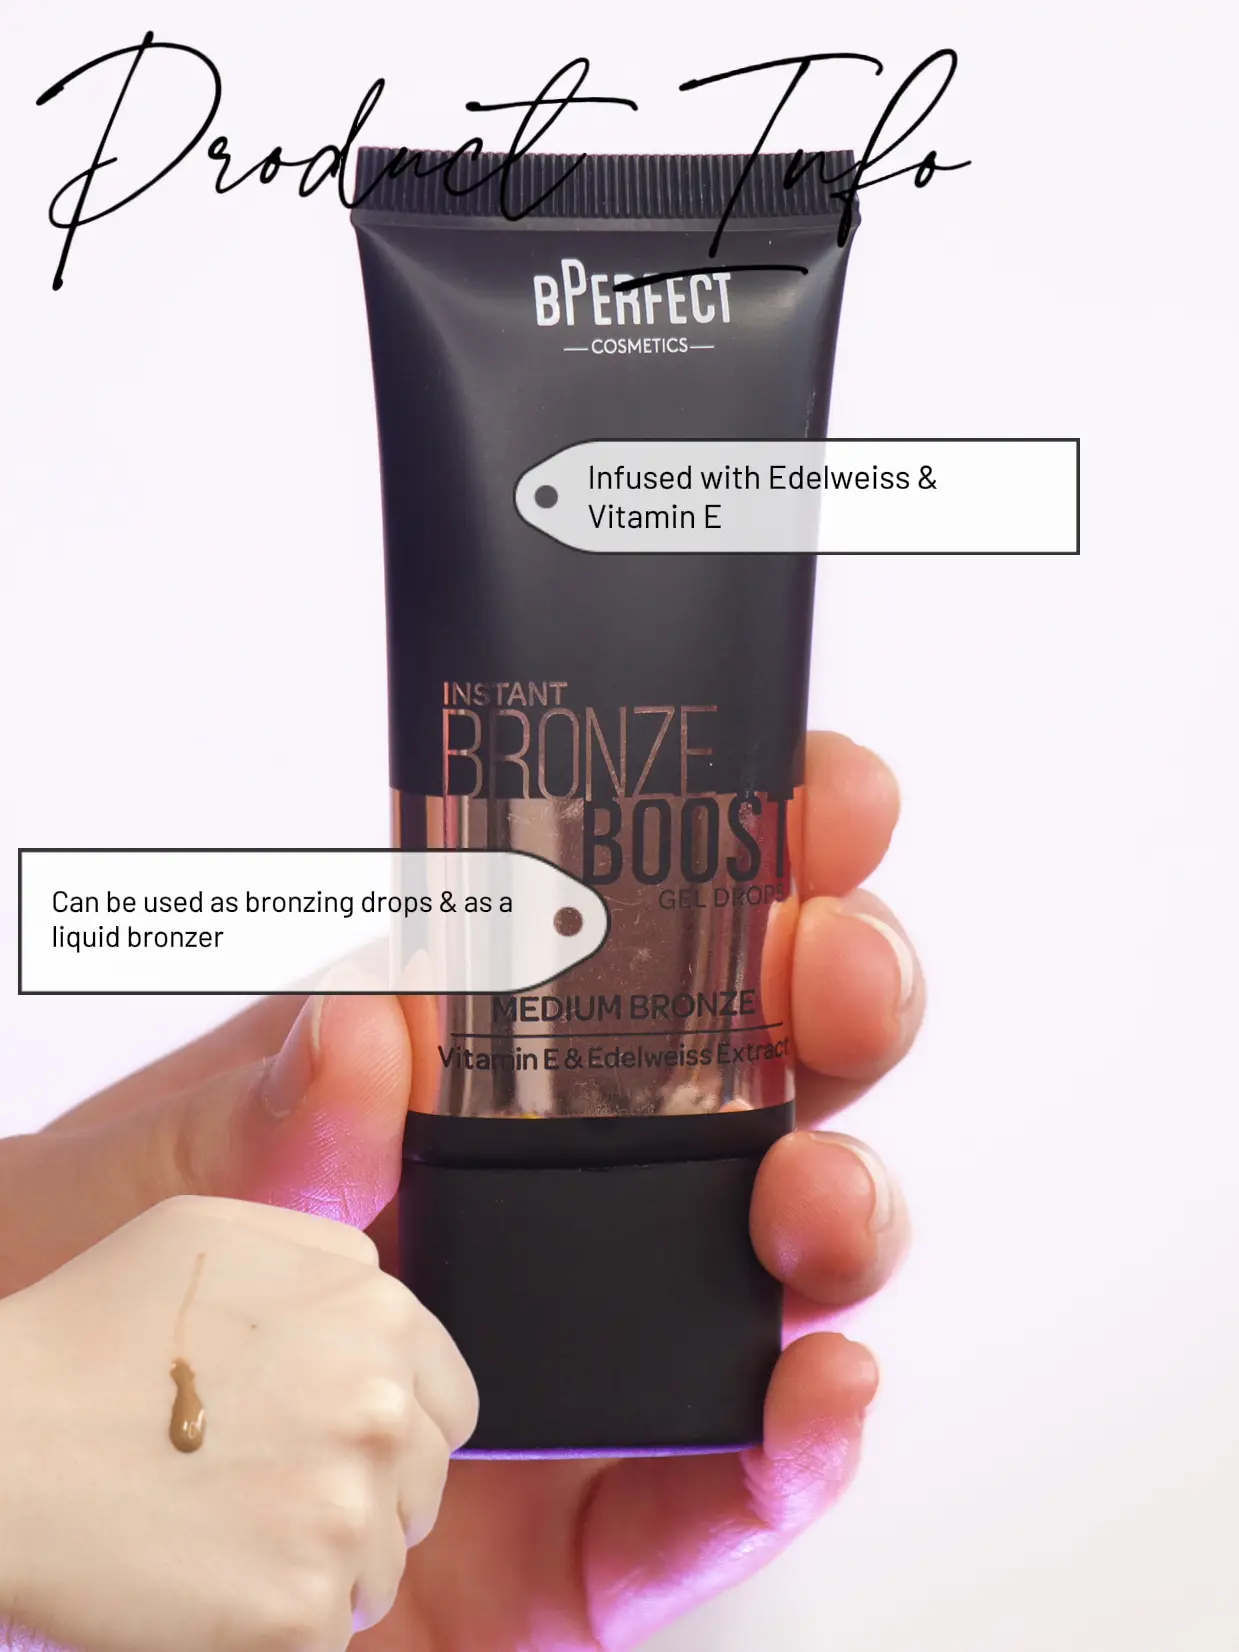 Instant Bronze Boost Gel Drops – BPerfect Cosmetics (US)